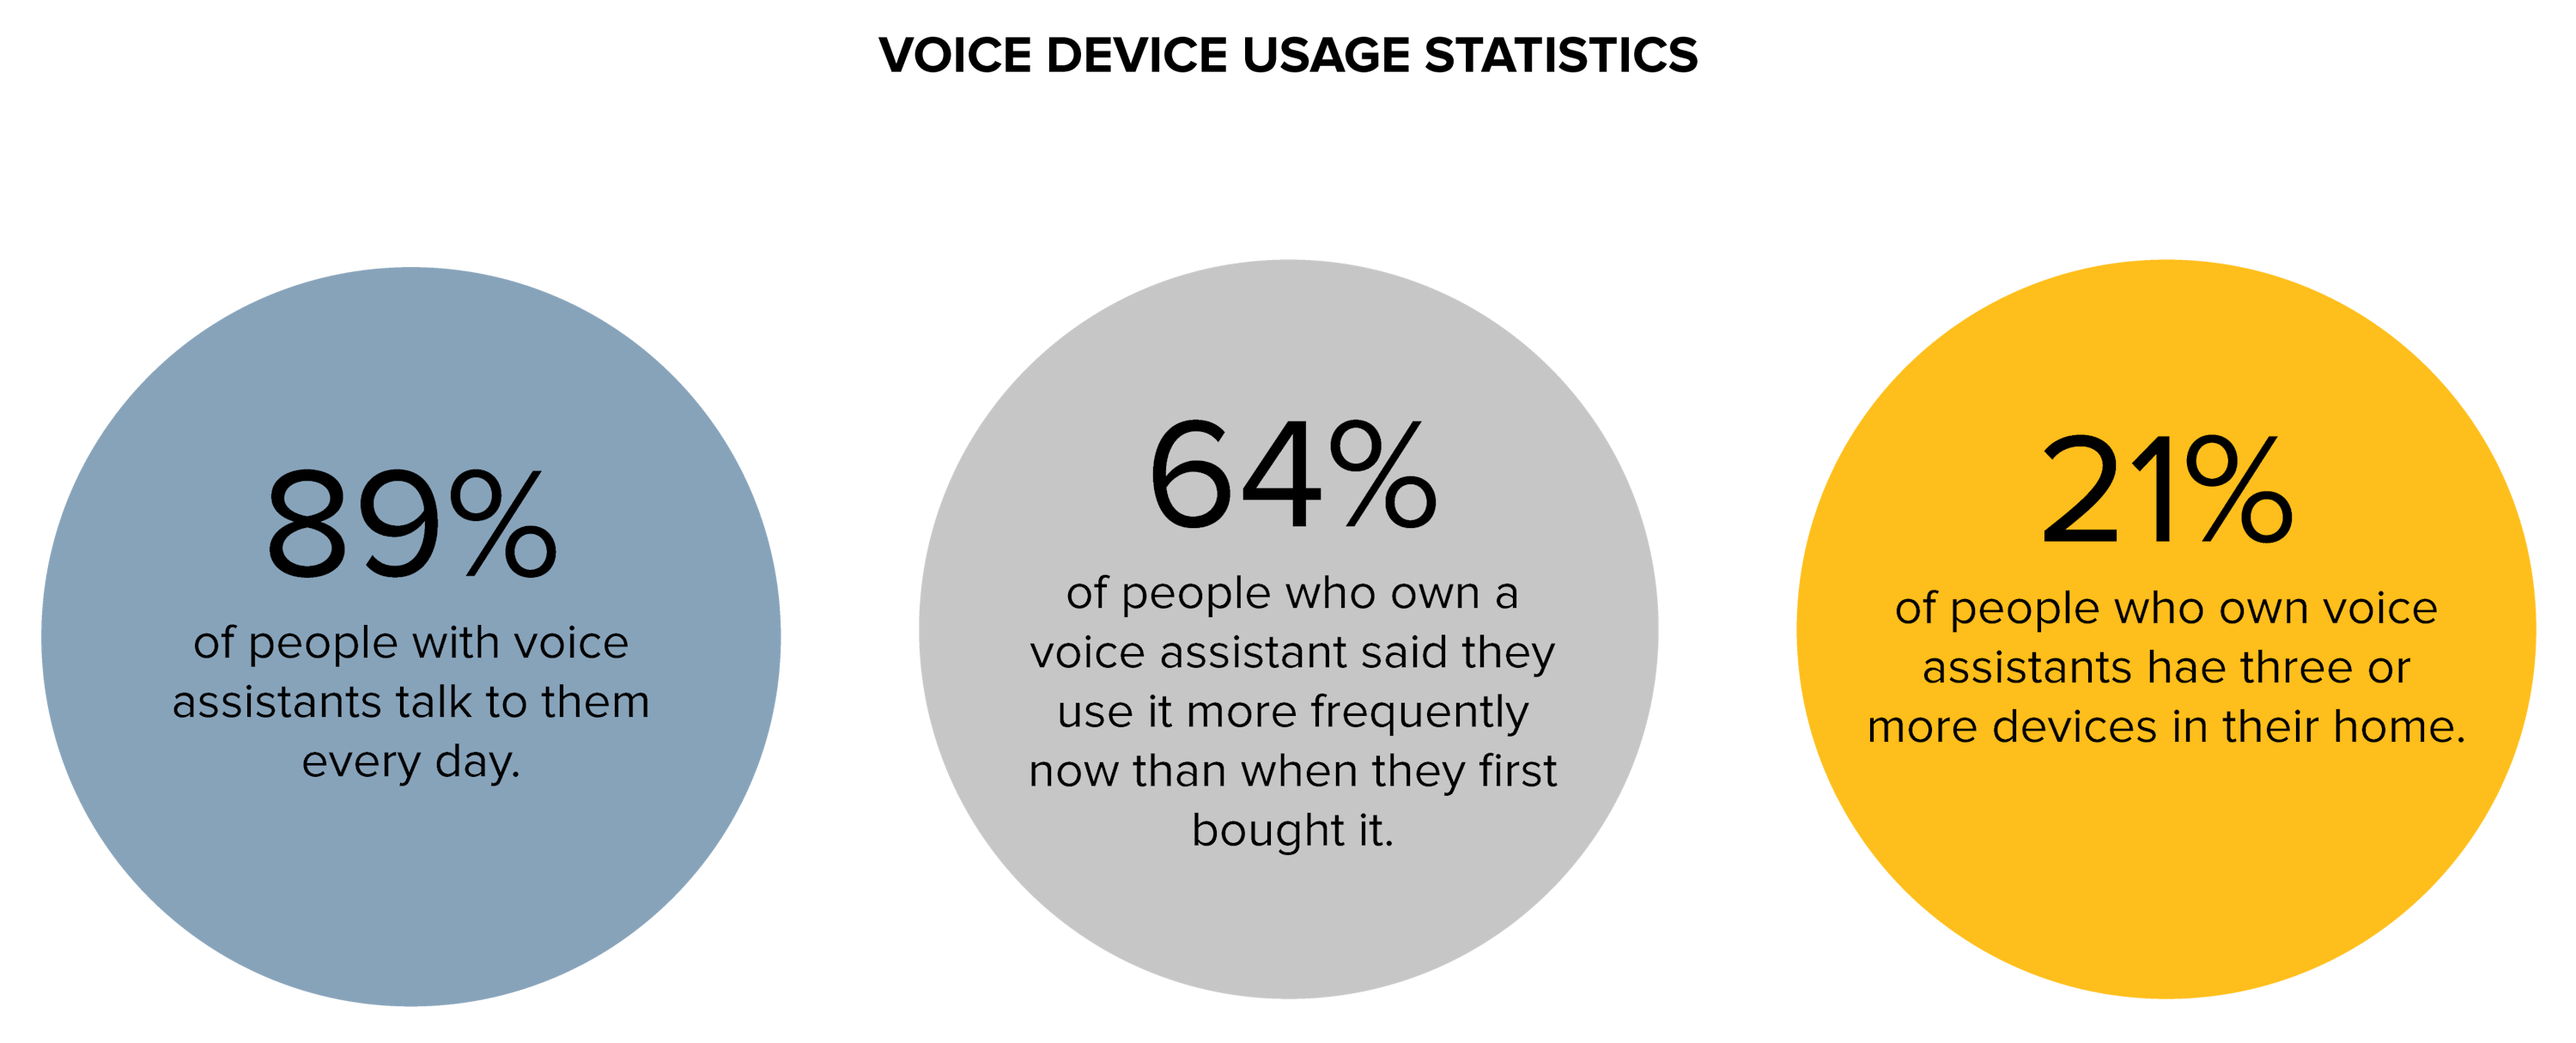 voice device usage statistics 